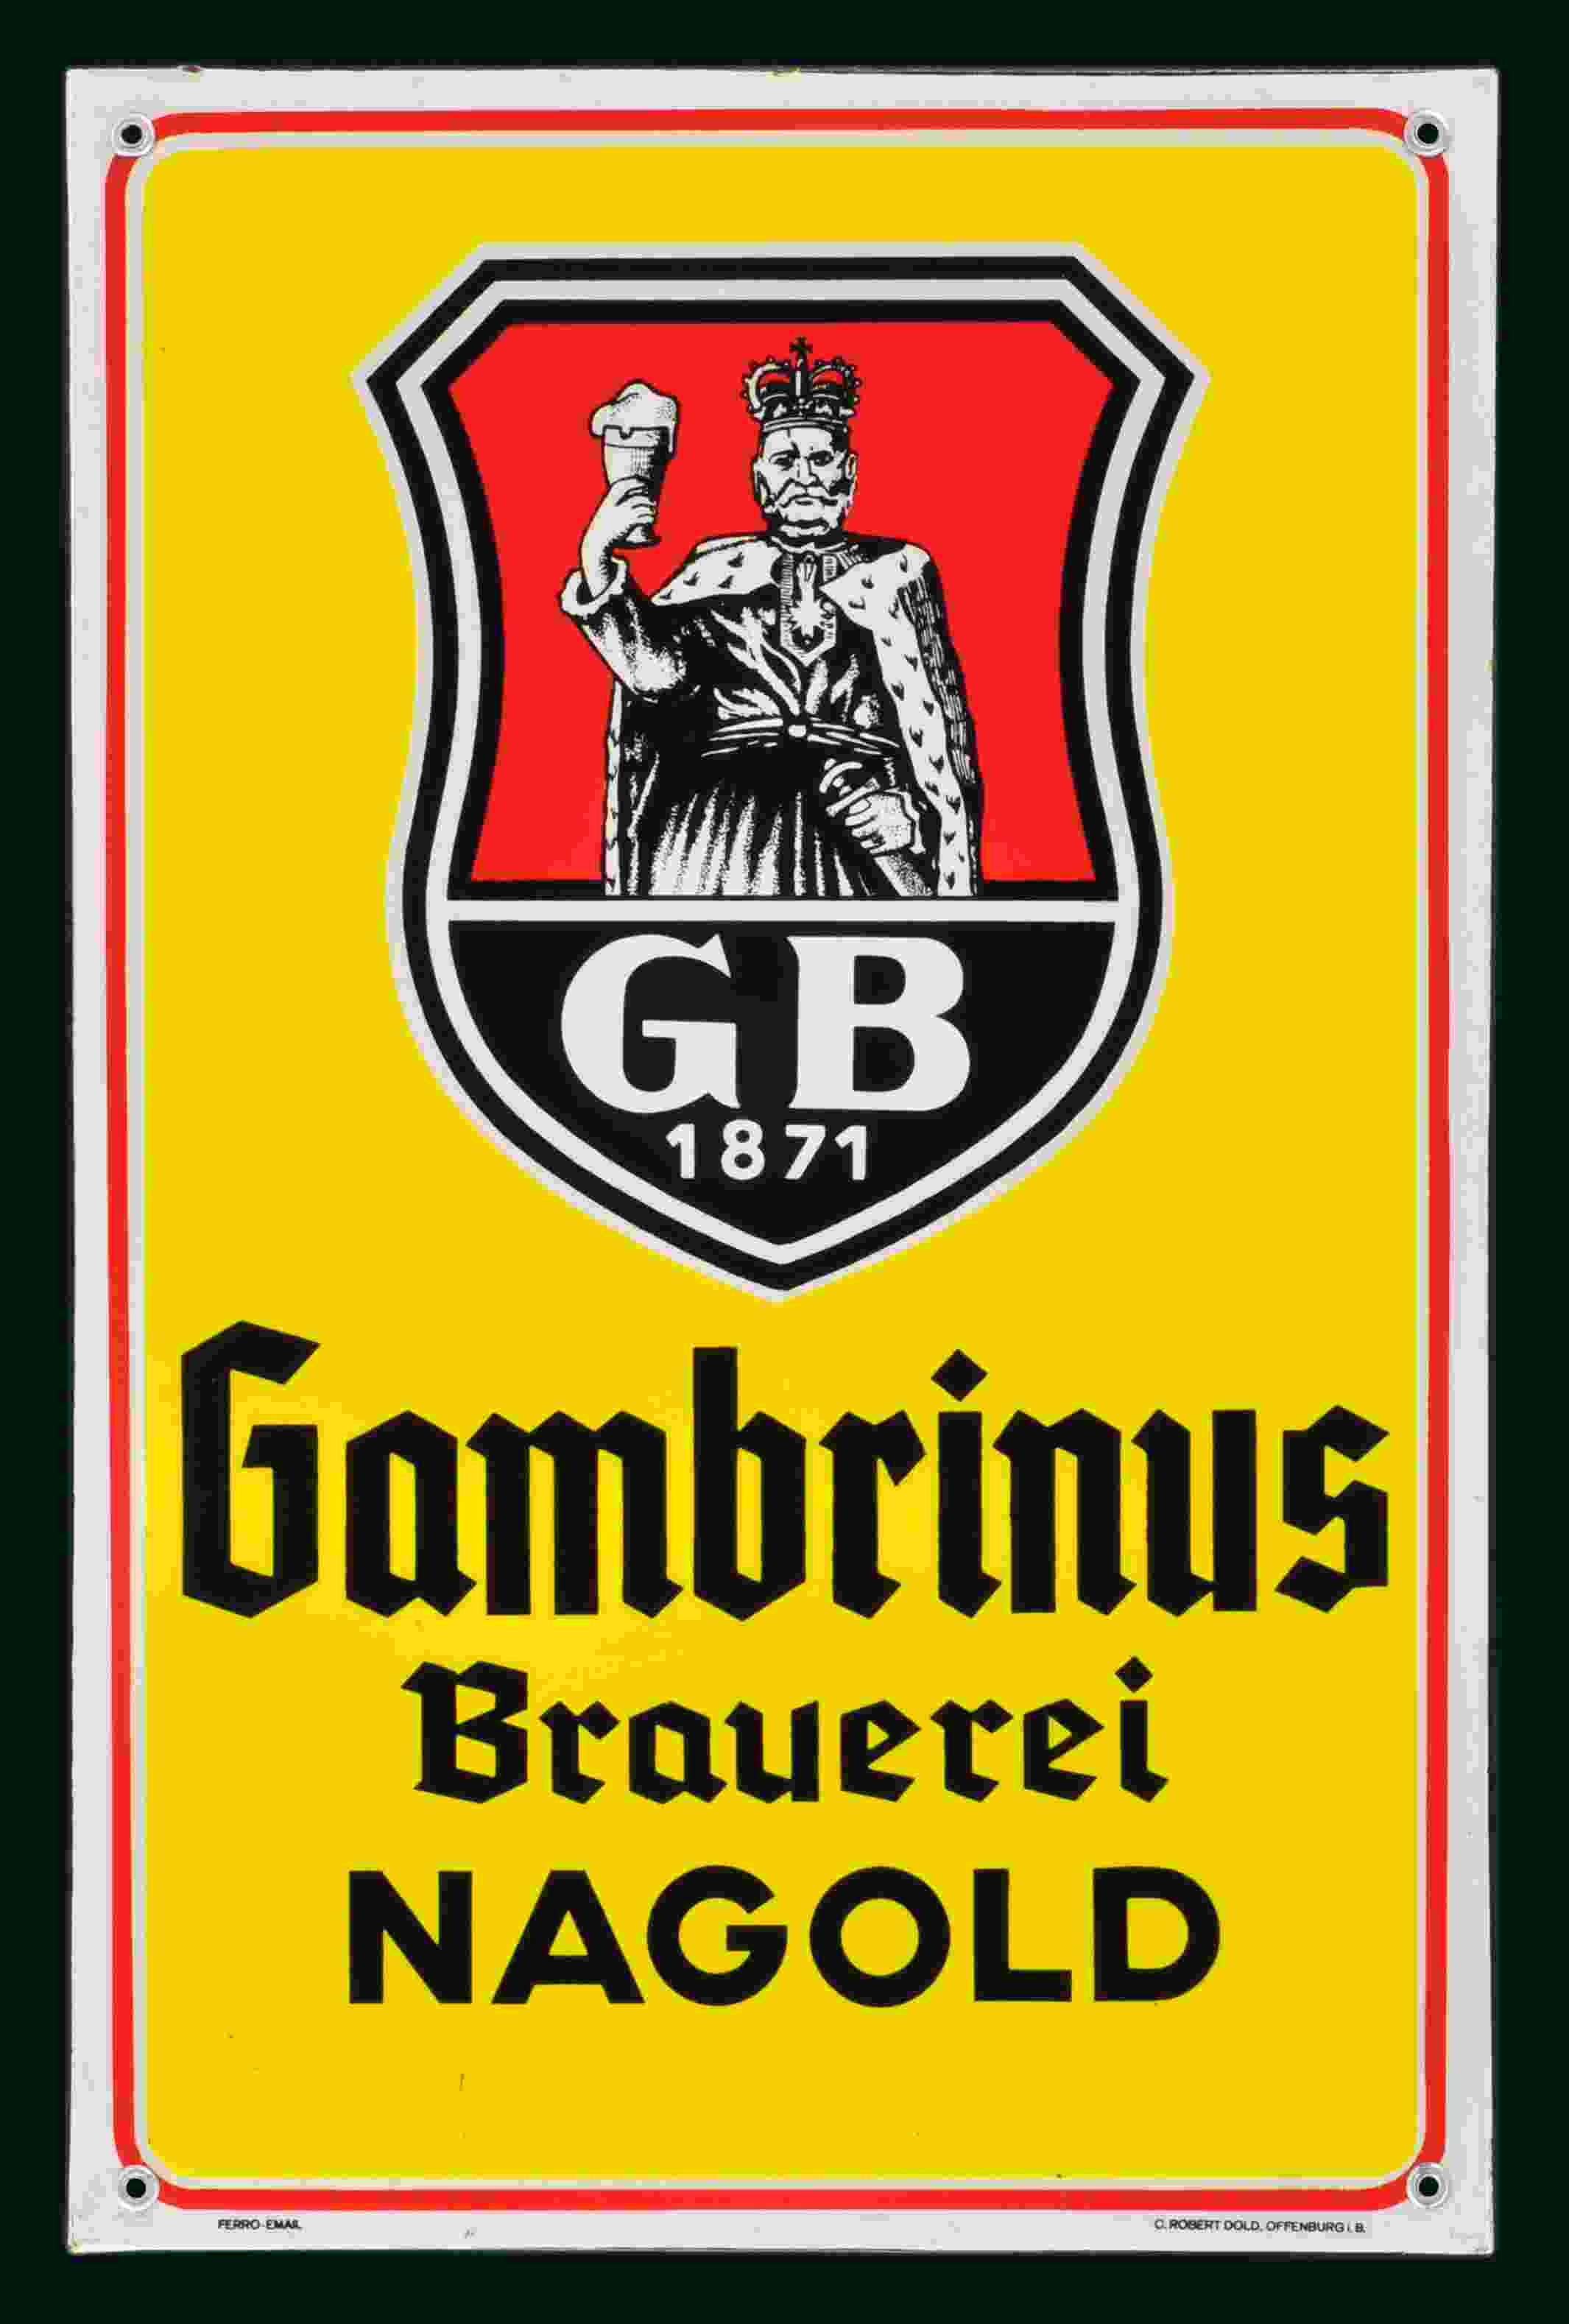 Gambrinus Brauerei 